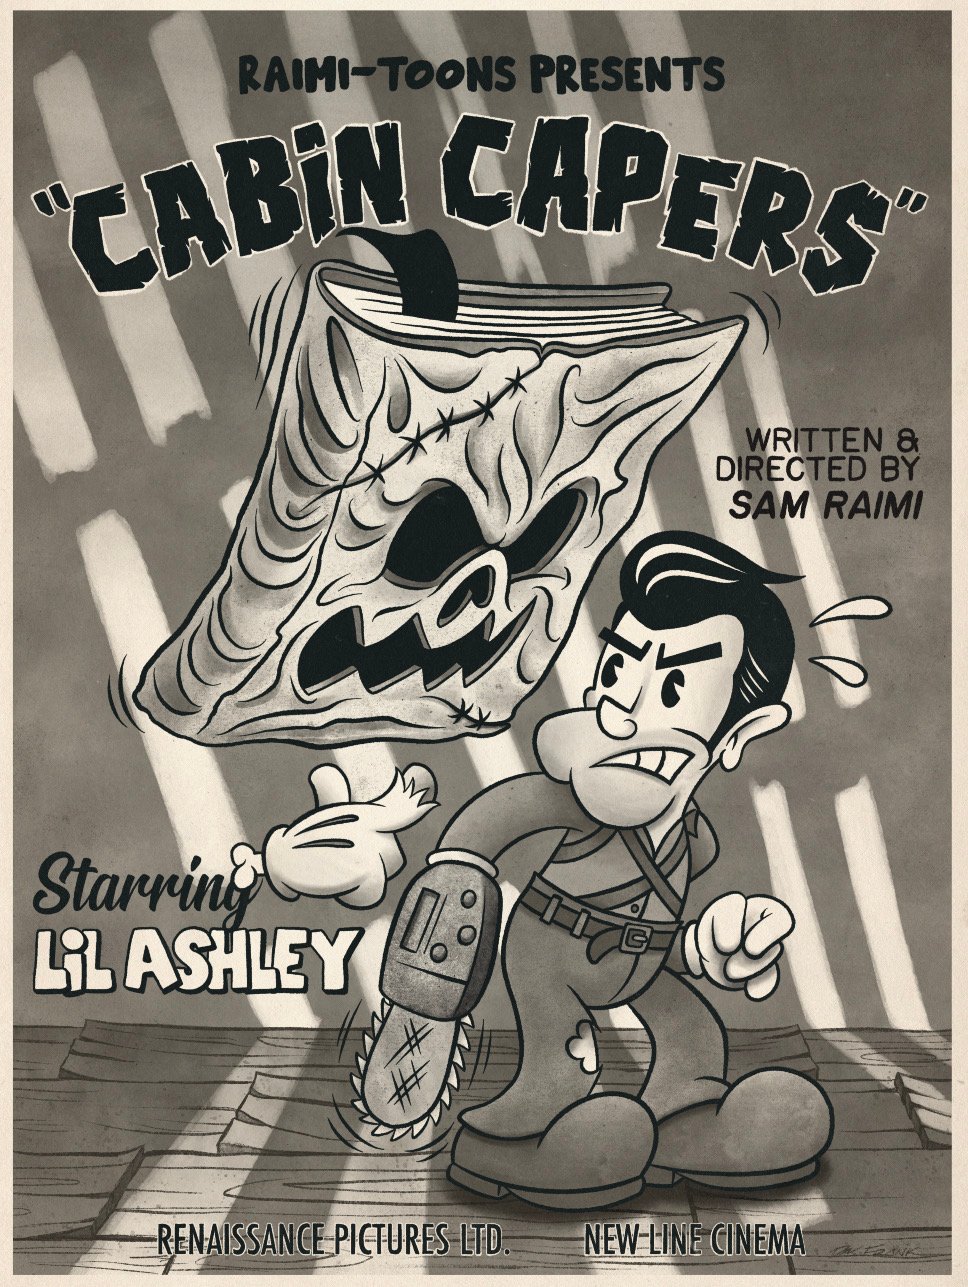 Cabin Capers